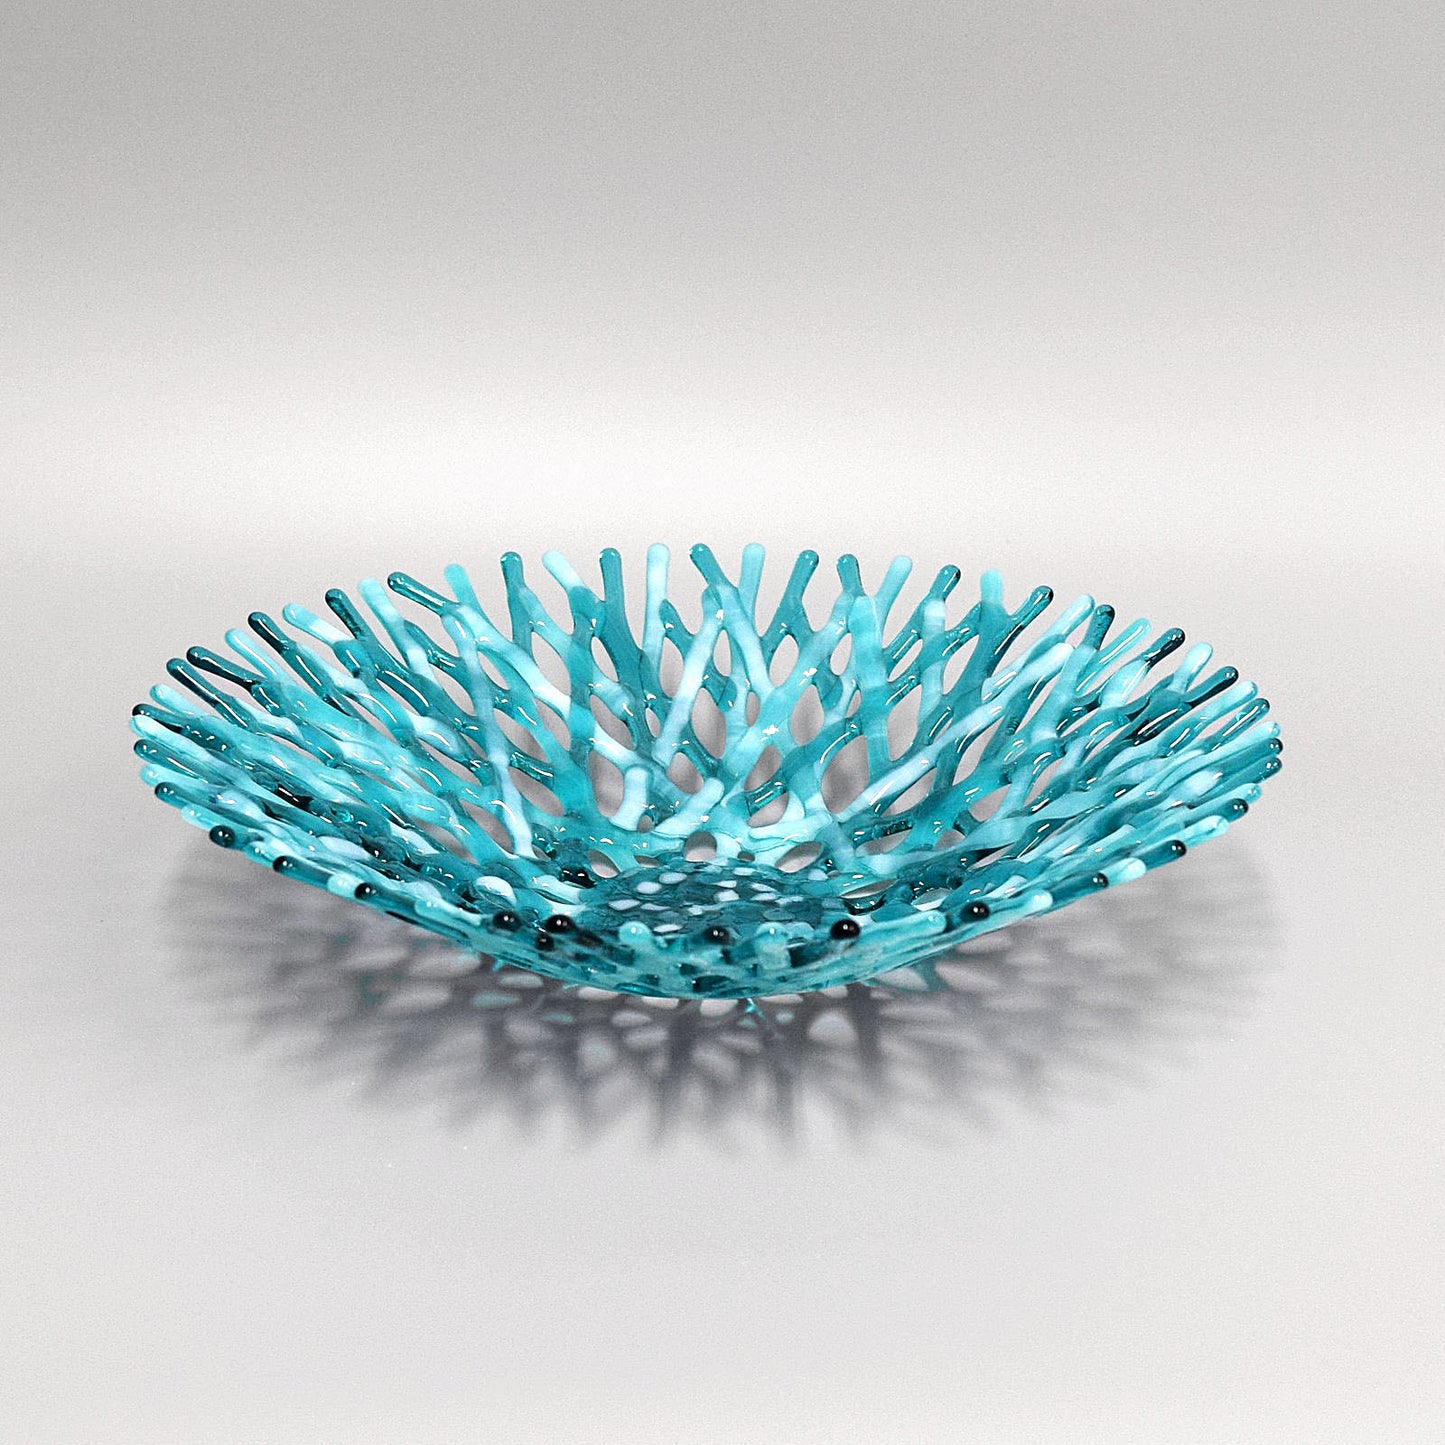 Glass Art Coral Bowl in Aquamarine Blue Green and Wispy White Sea Glass